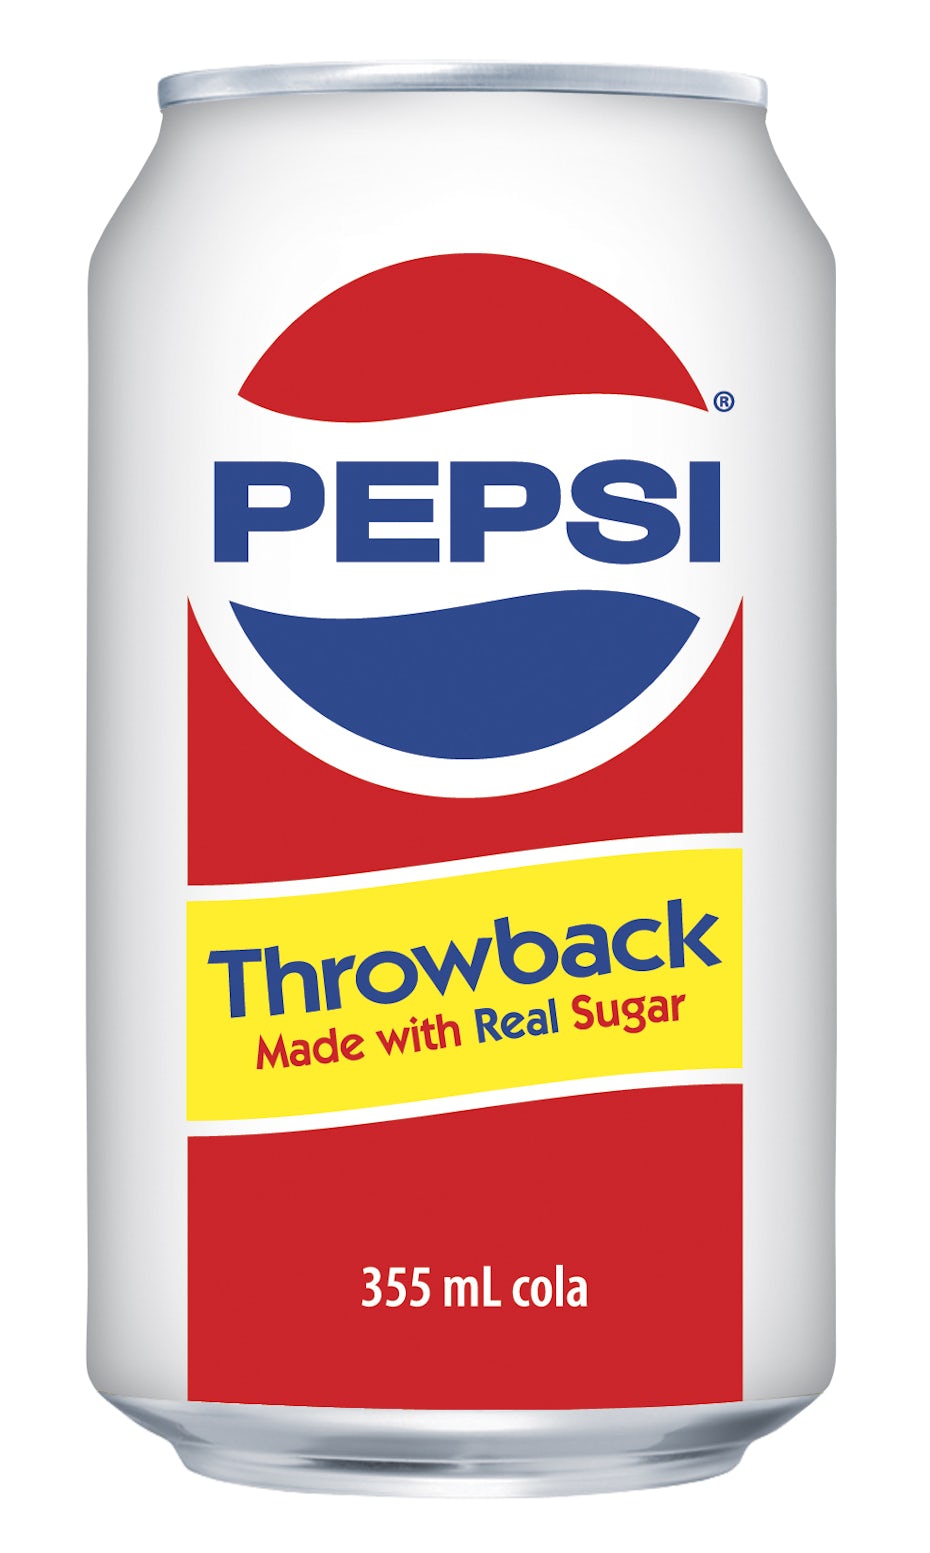 La historia del logotipo de Pepsi